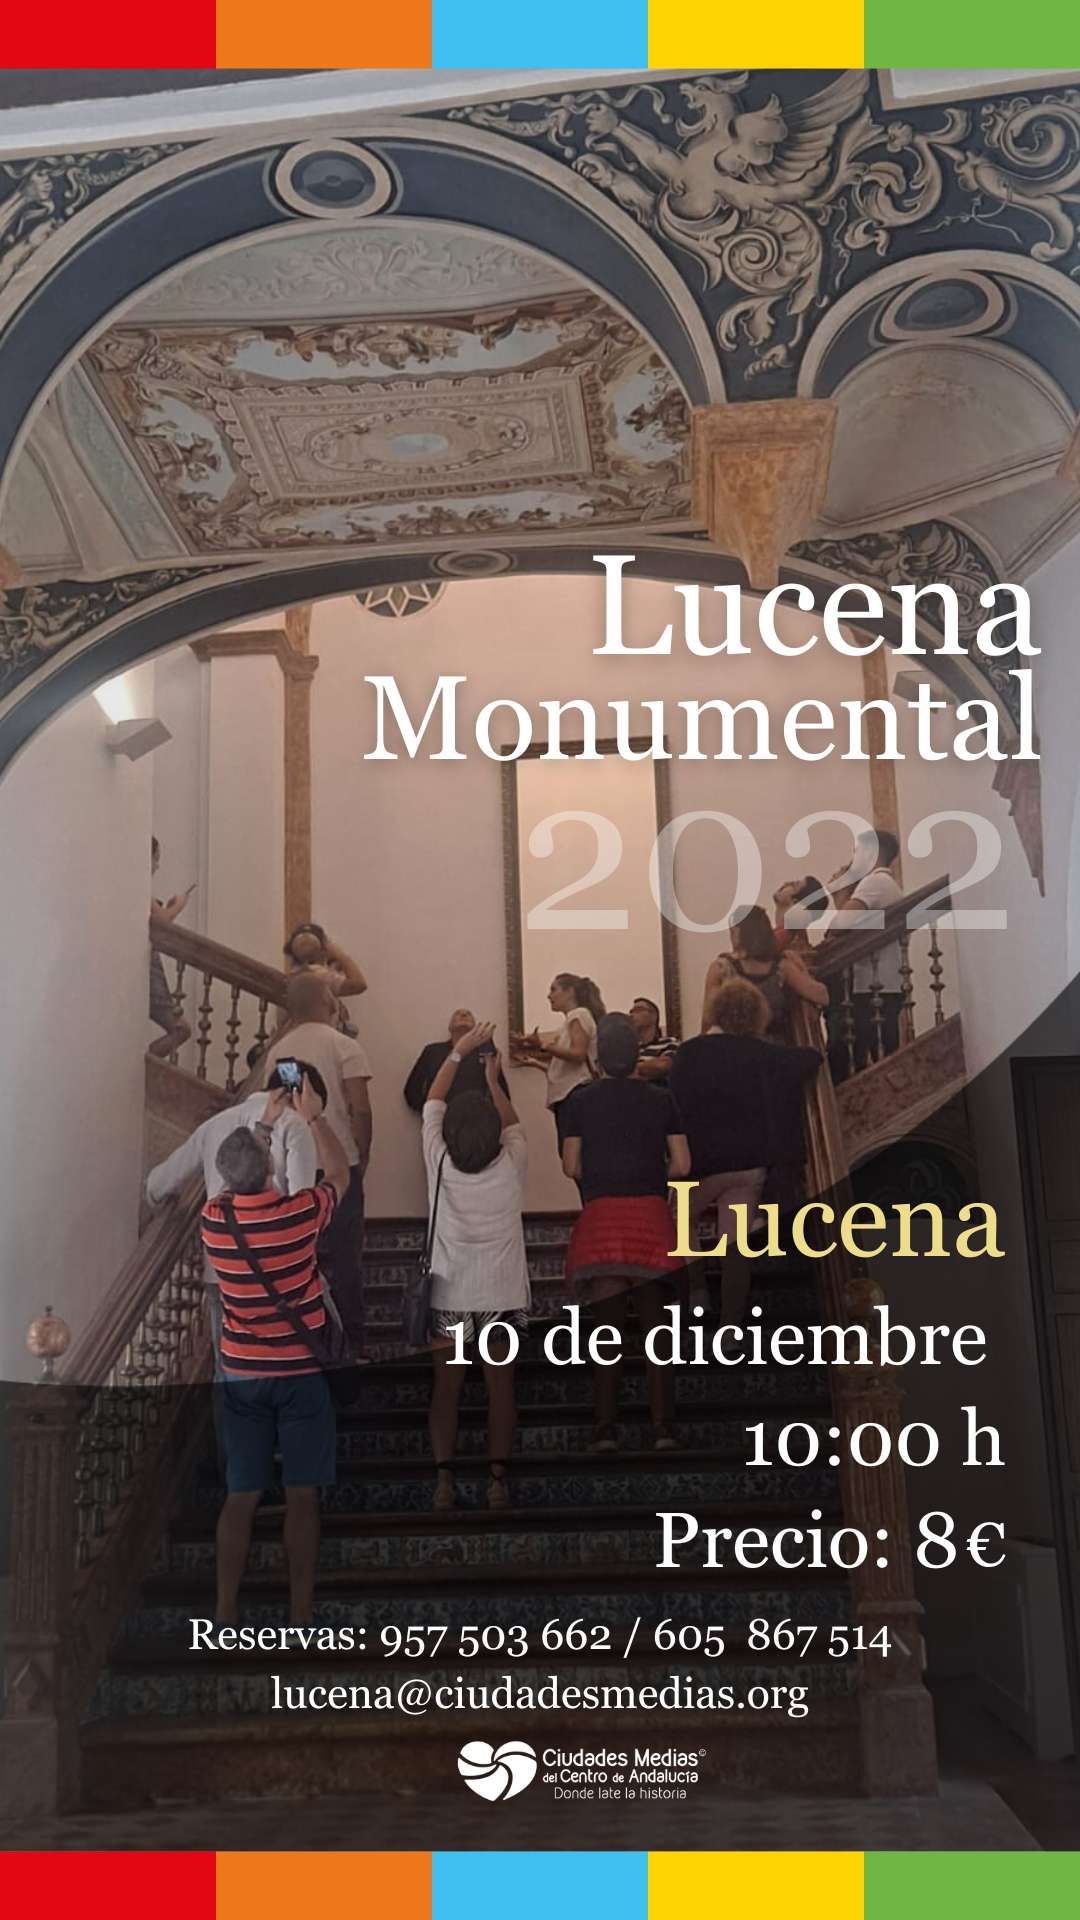 Lucena Monumental